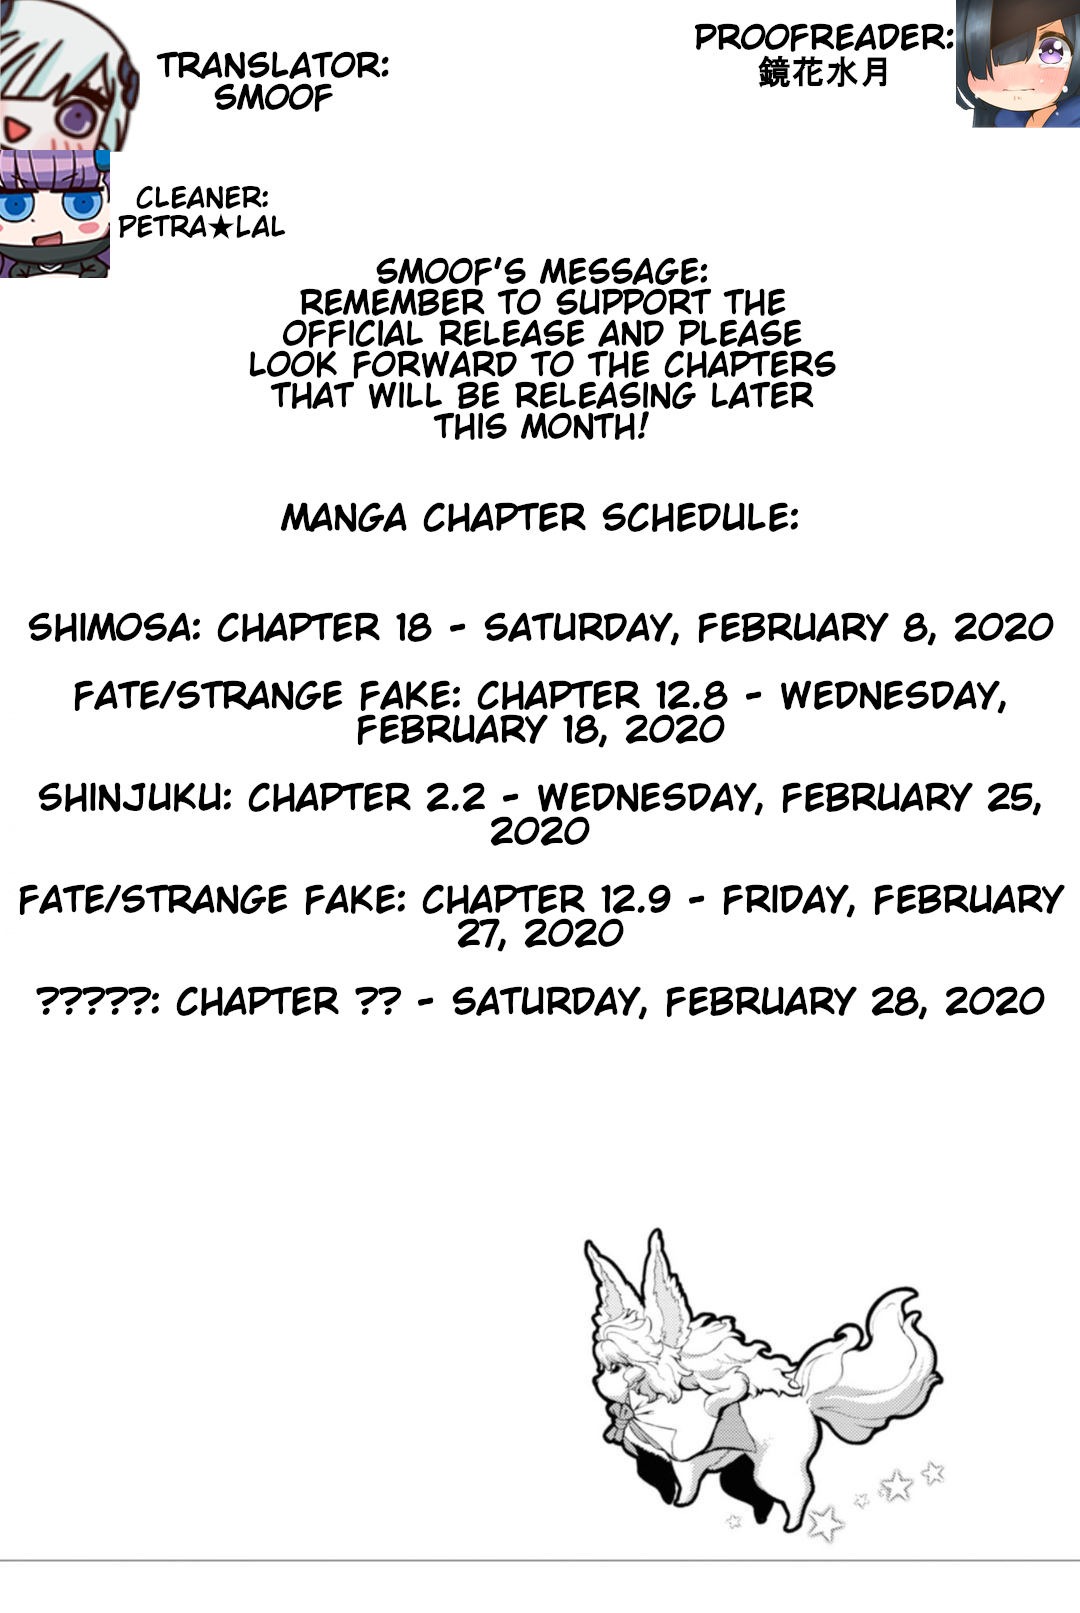 Fate/Grand Order: Epic of Remnant - Pseudo-Singularity I: Quarantined Territory of Malice, Shinjuku - Shinjuku Phantom Incident vol.1 ch.2.1